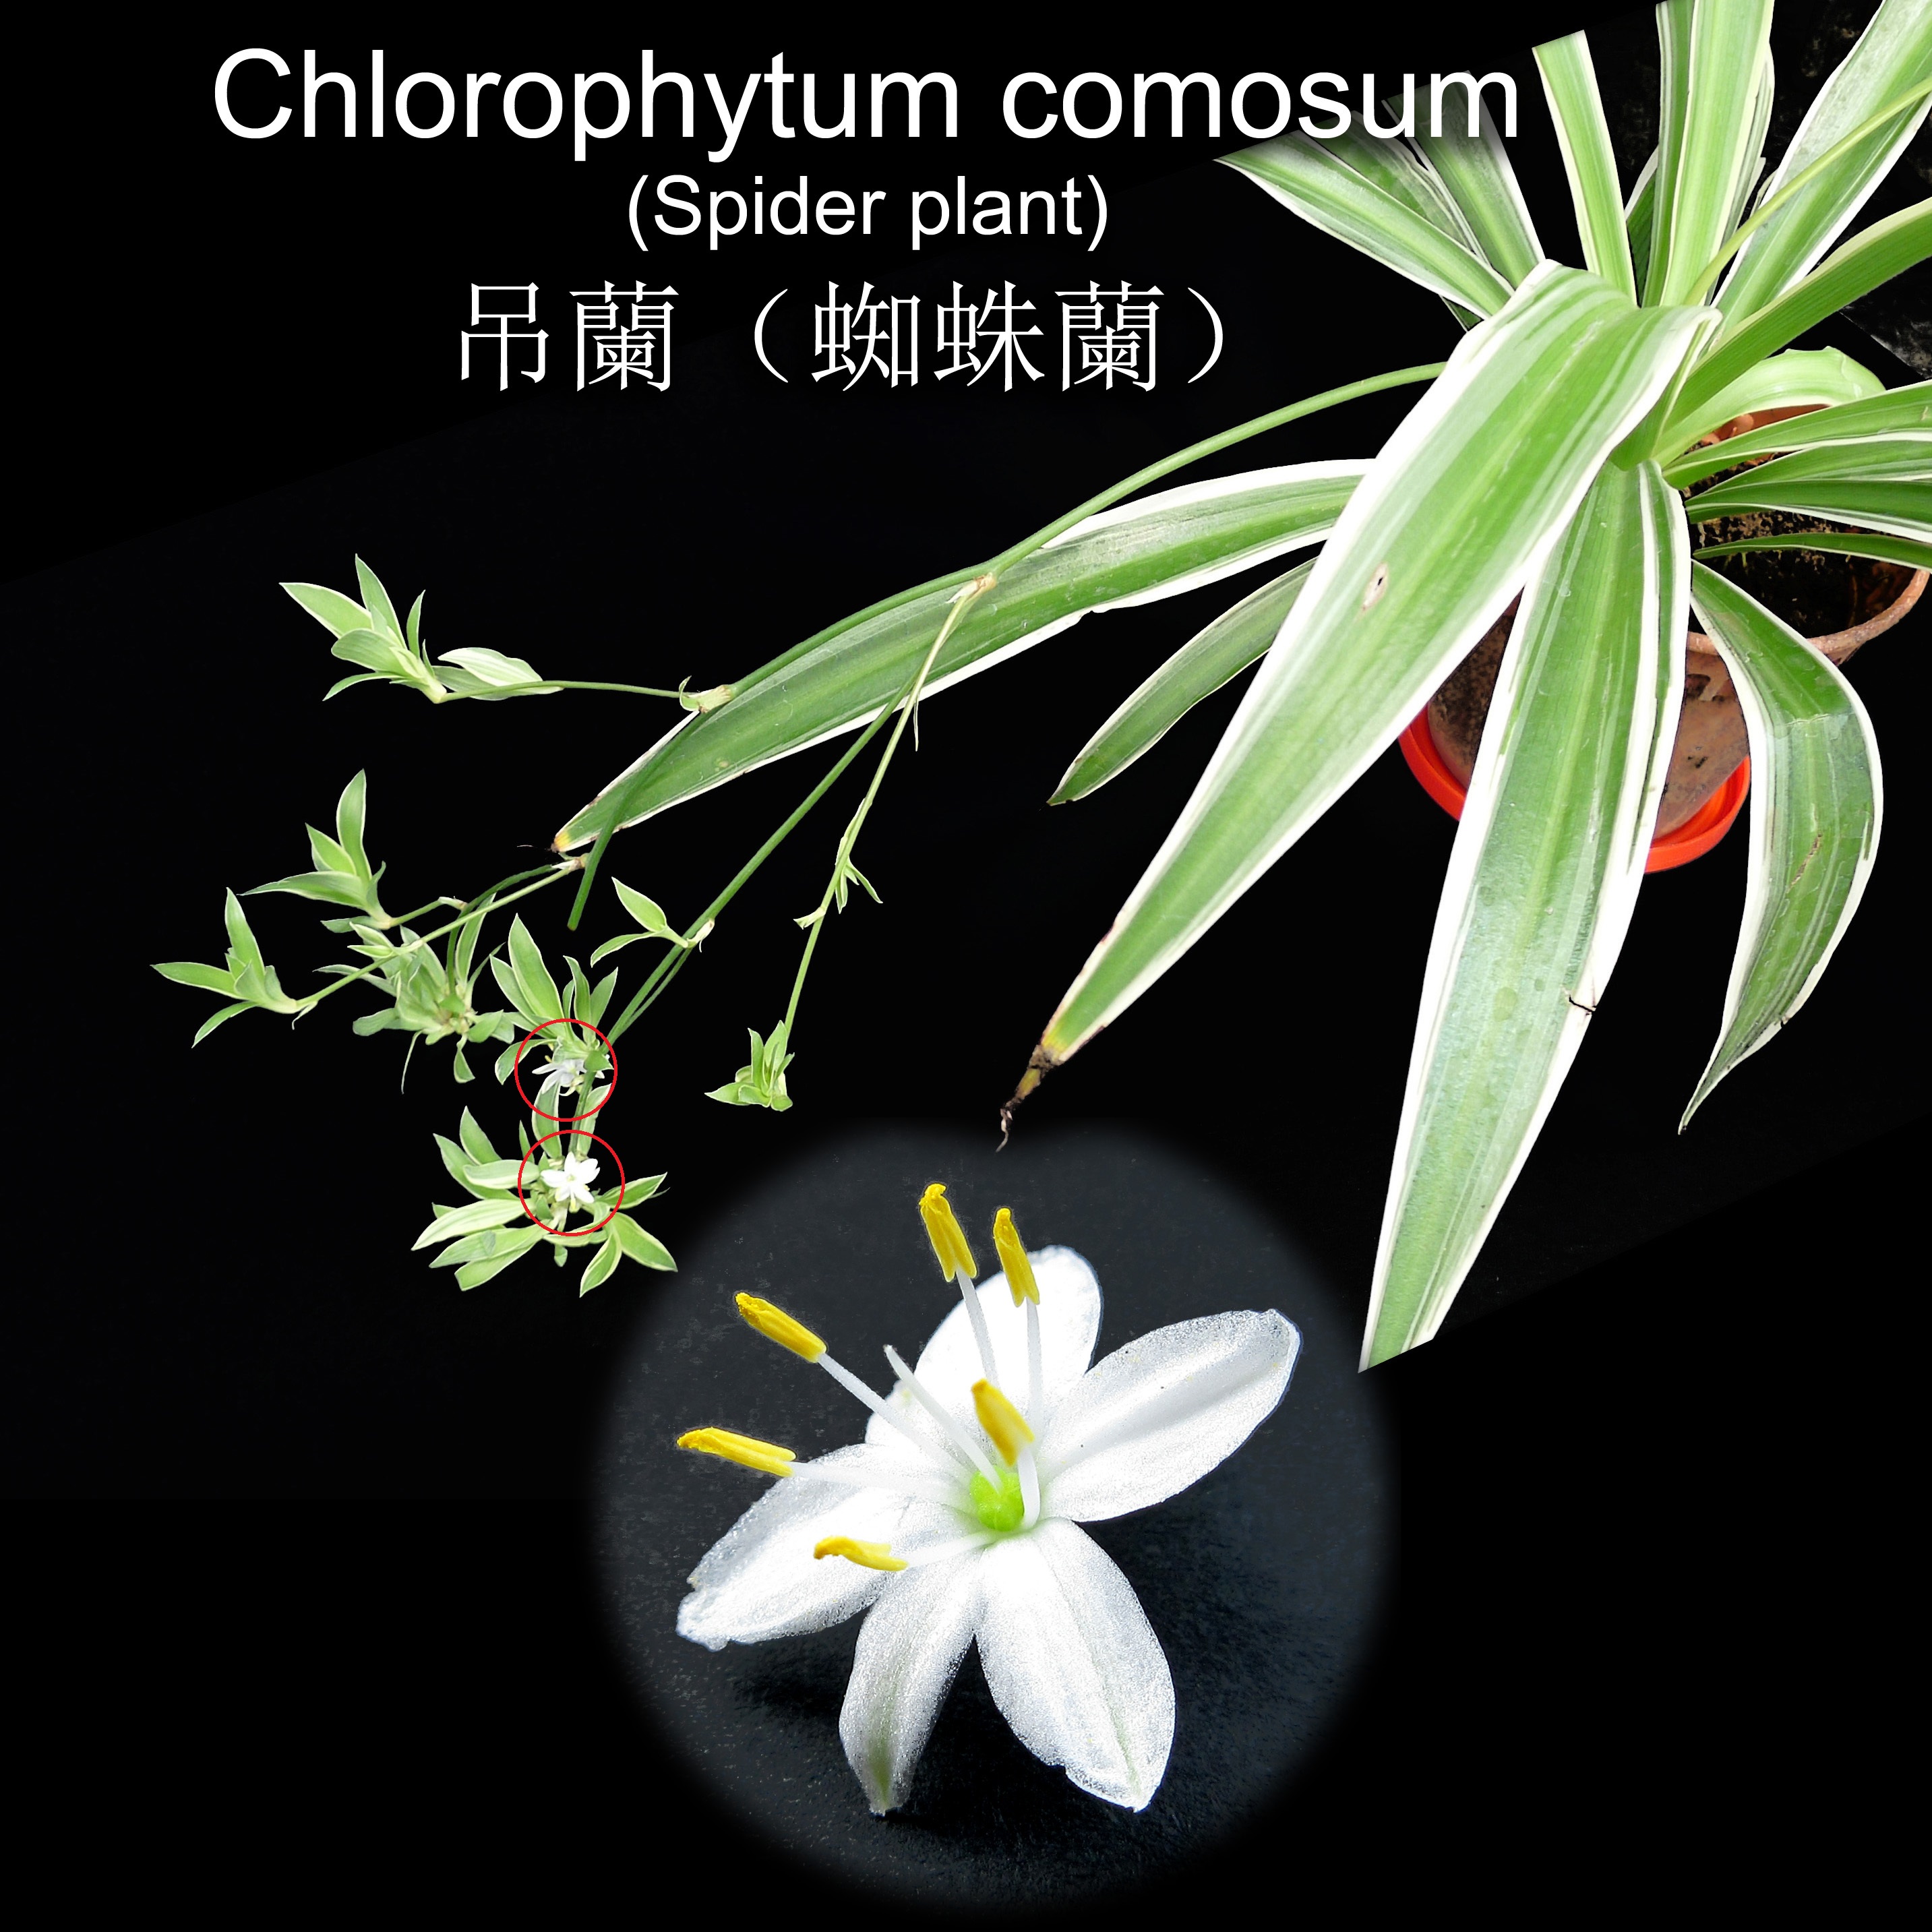 Flower of Chlorophytum comosum (Spider plant) 吊蘭（蜘蛛蘭）